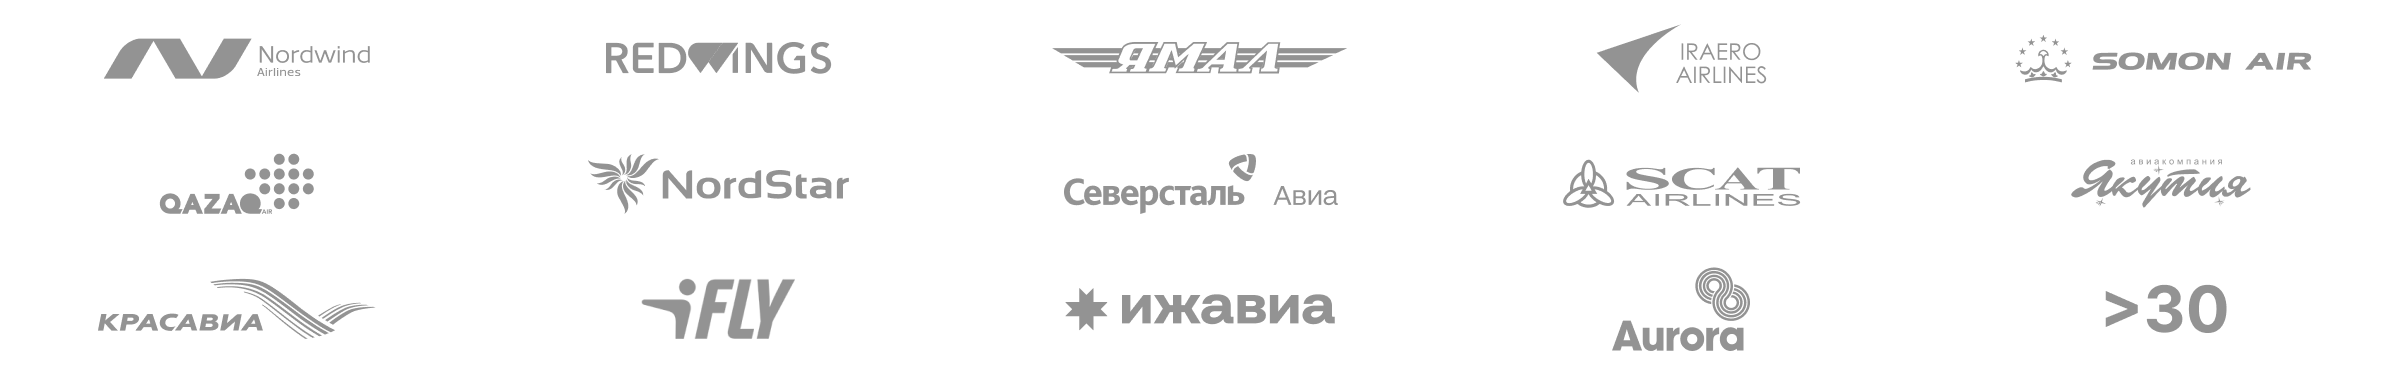 avia companies